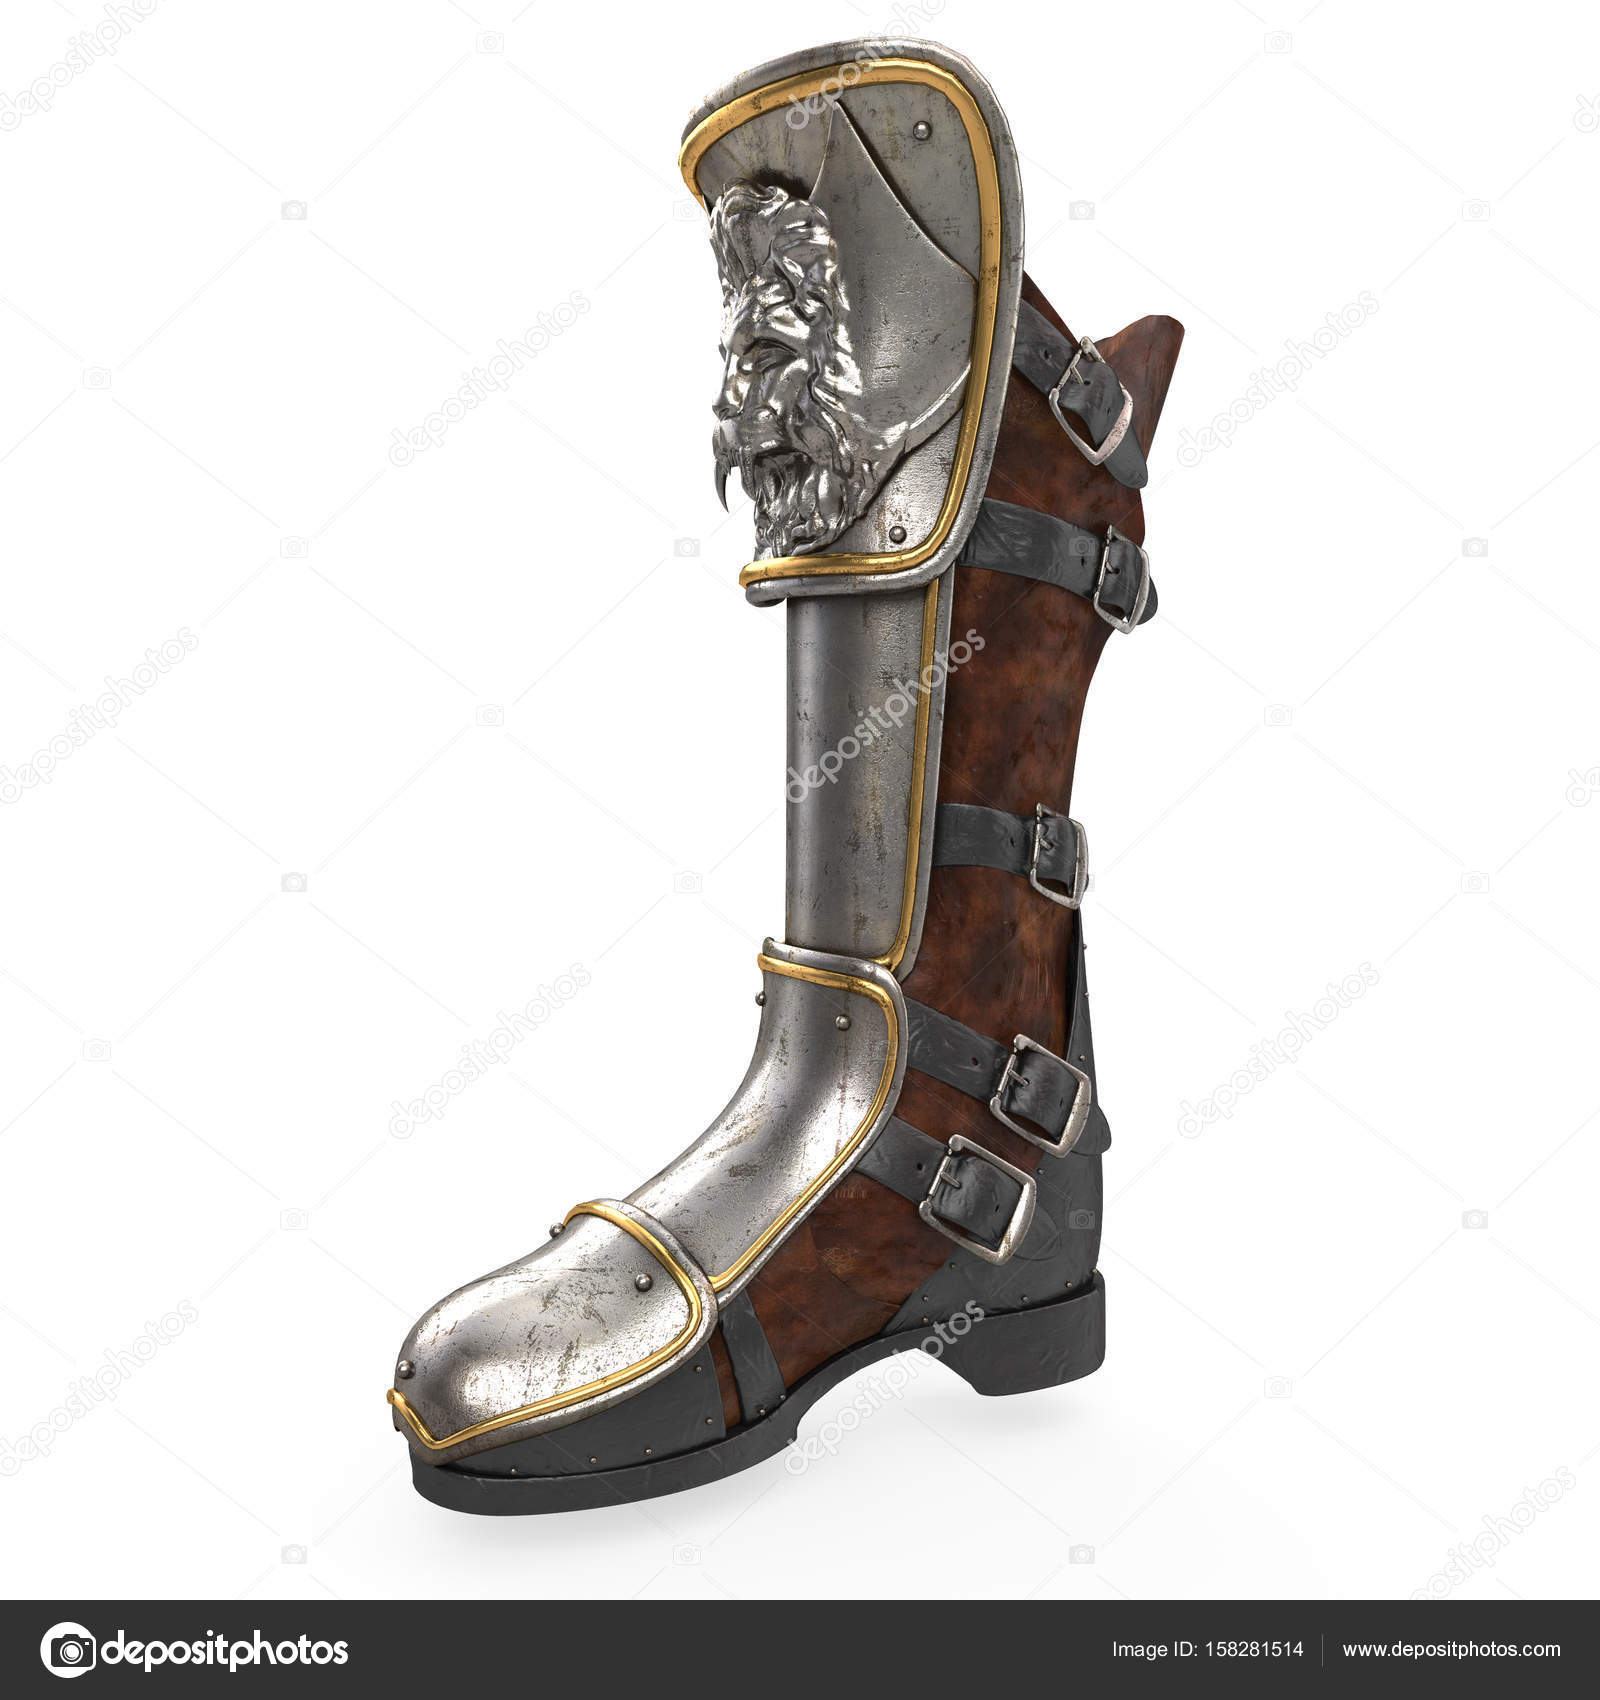 depositphotos_158281514-stock-photo-iron-fantasy-high-boots-knight